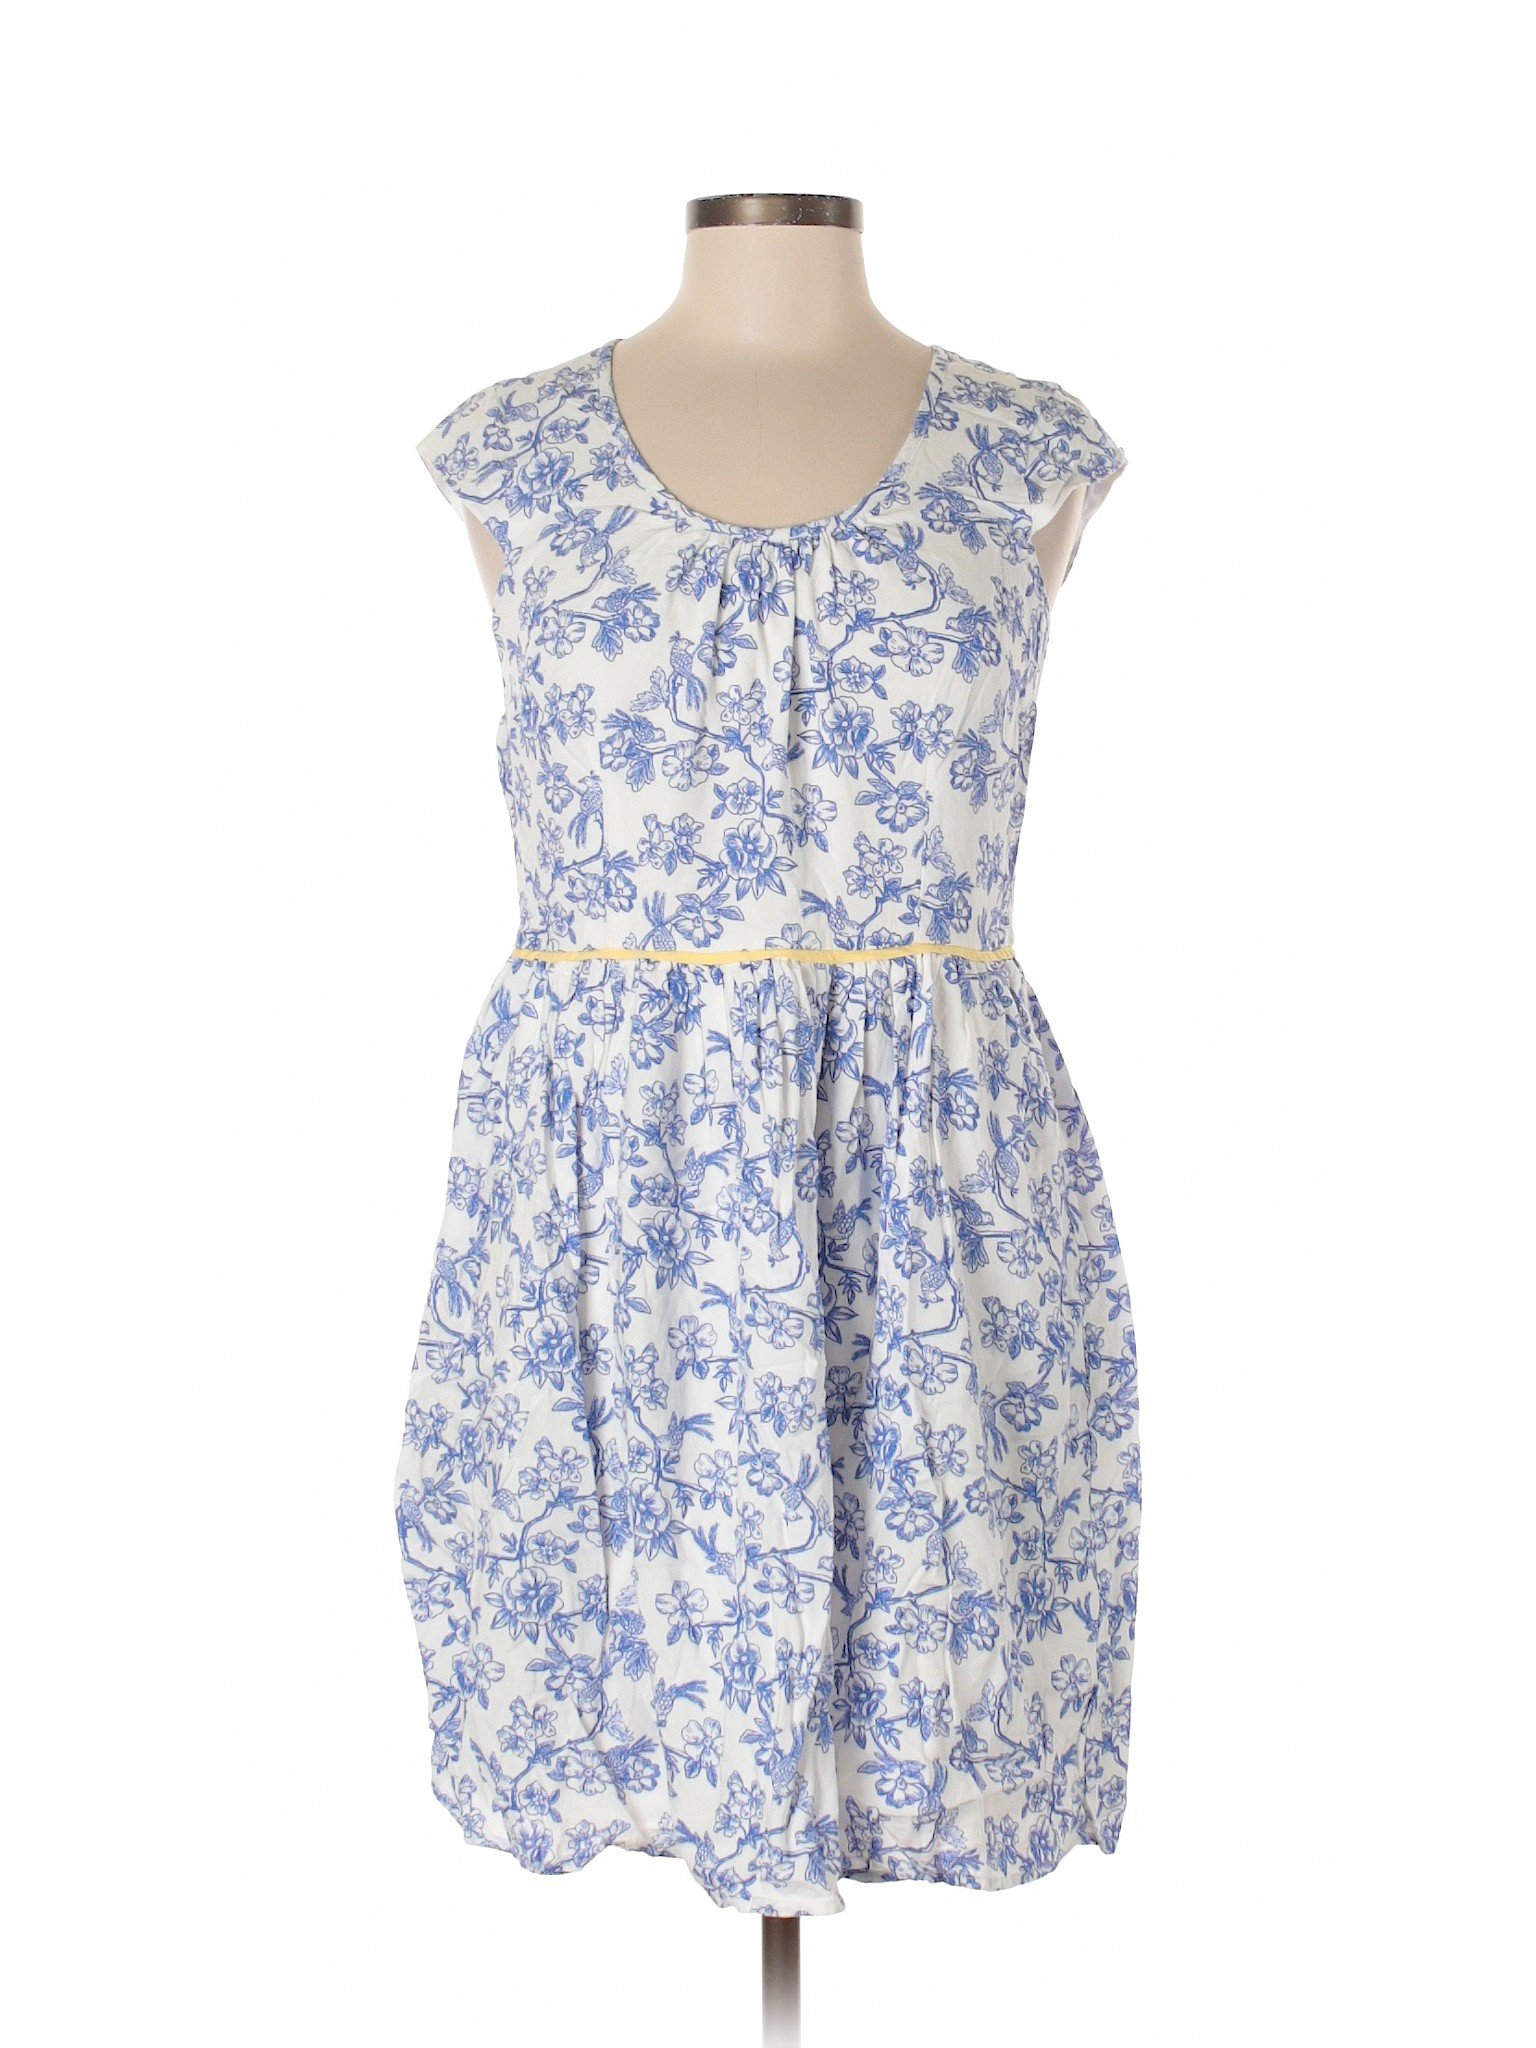 Matilda Jane Floral Blue Casual Dress Size 6 - 90% off | thredUP